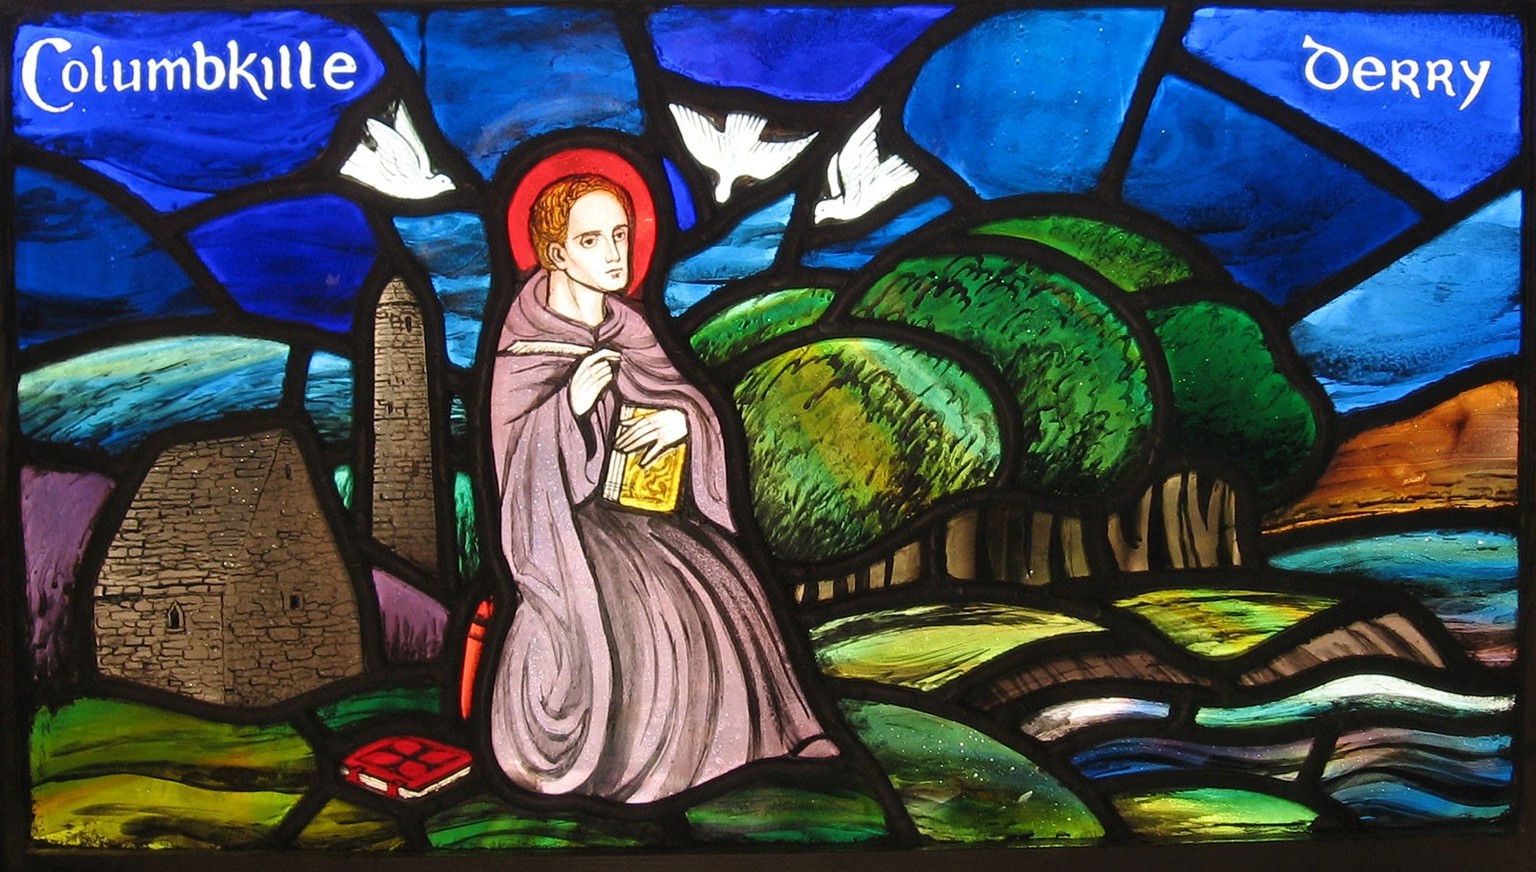 Der Heilige Columba auf einer Glasmalerei aus Pittsburgh, USA, um 1956. Columba bedeutet auf Lateinisch «Taube».
https://commons.wikimedia.org/wiki/Category:Saint_Columba_on_stained-glass_windows